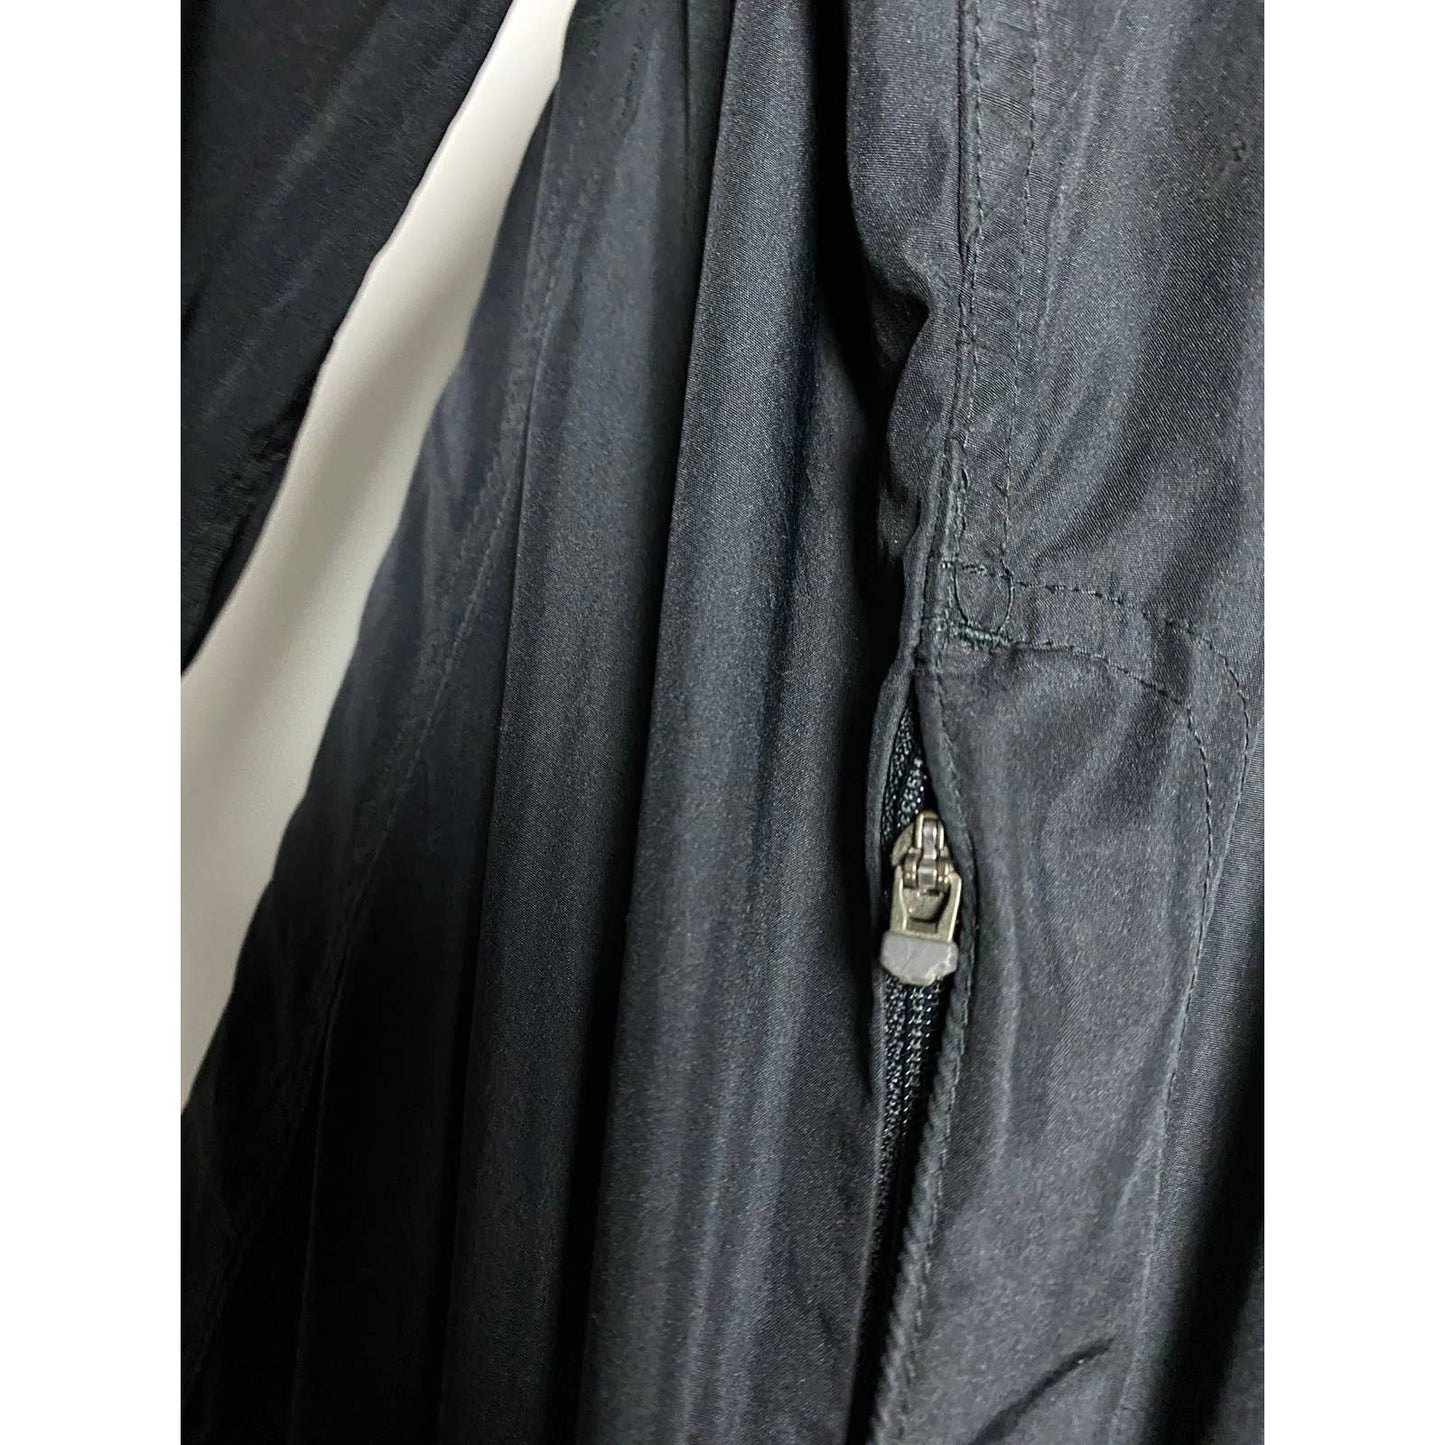 Nike ACG vintage reversible jacket fleece black 2000s